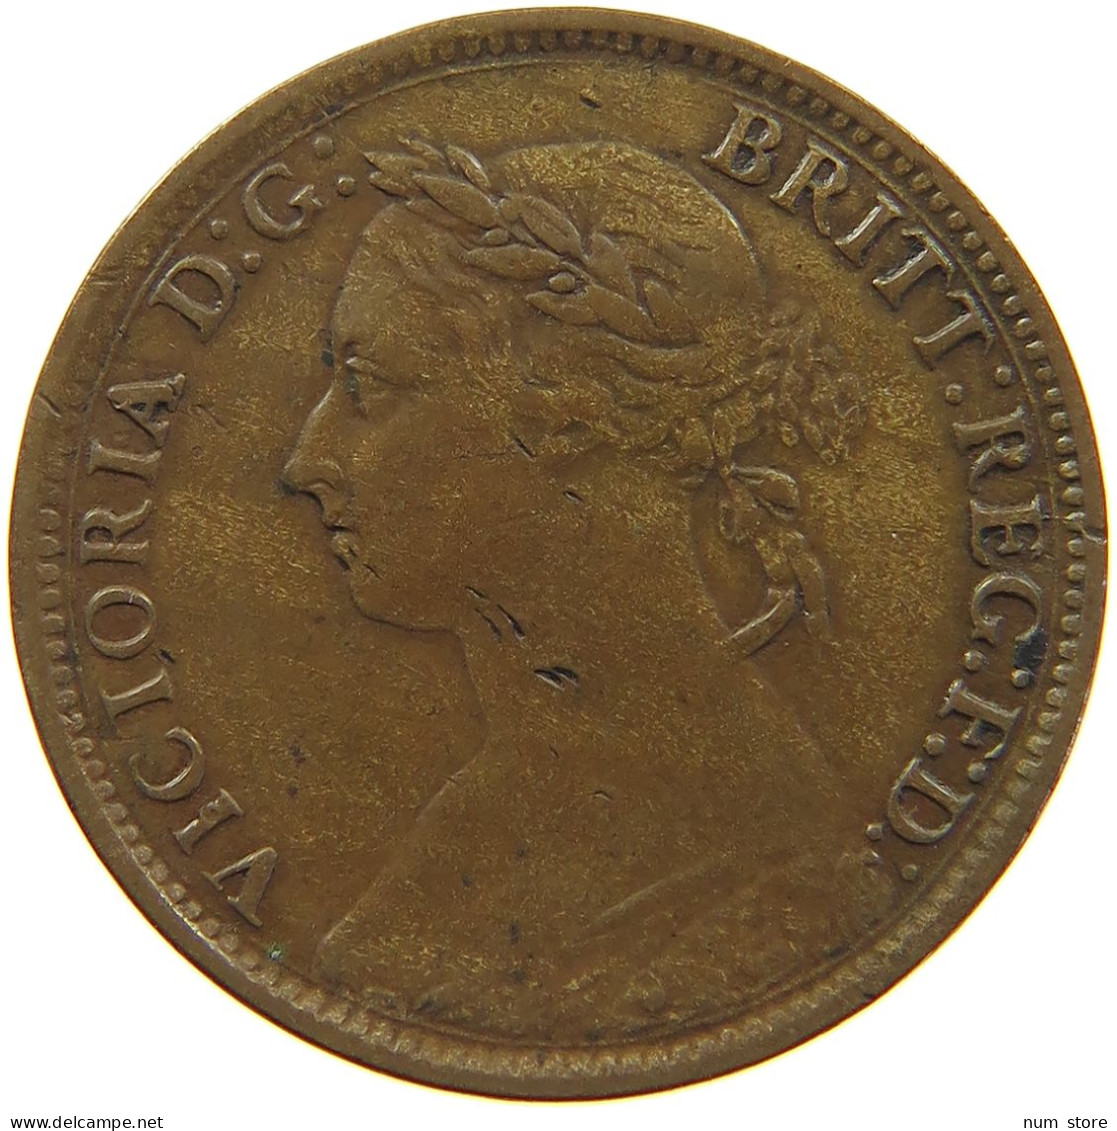 GREAT BRITAIN FARTHING 1884 Victoria 1837-1901 #s029 0203 - B. 1 Farthing